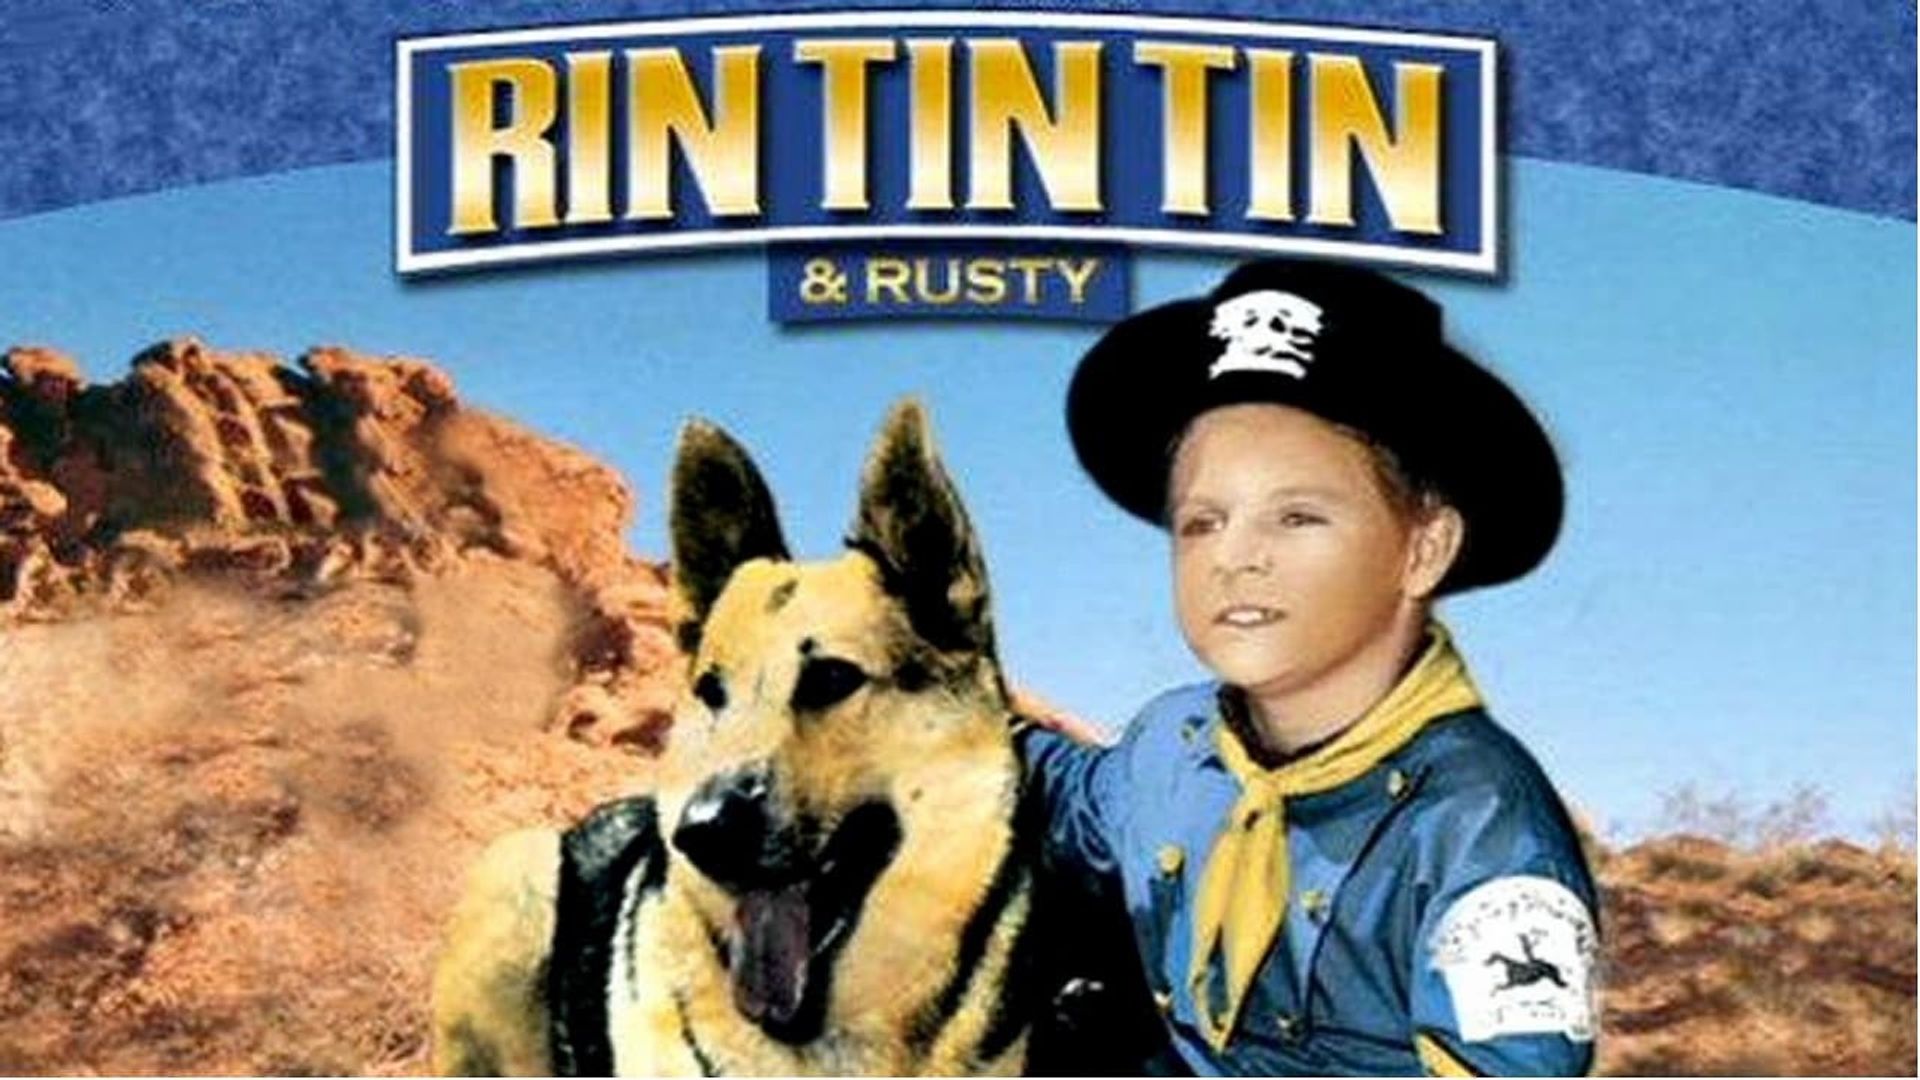 The Adventures of Rin Tin Tin background